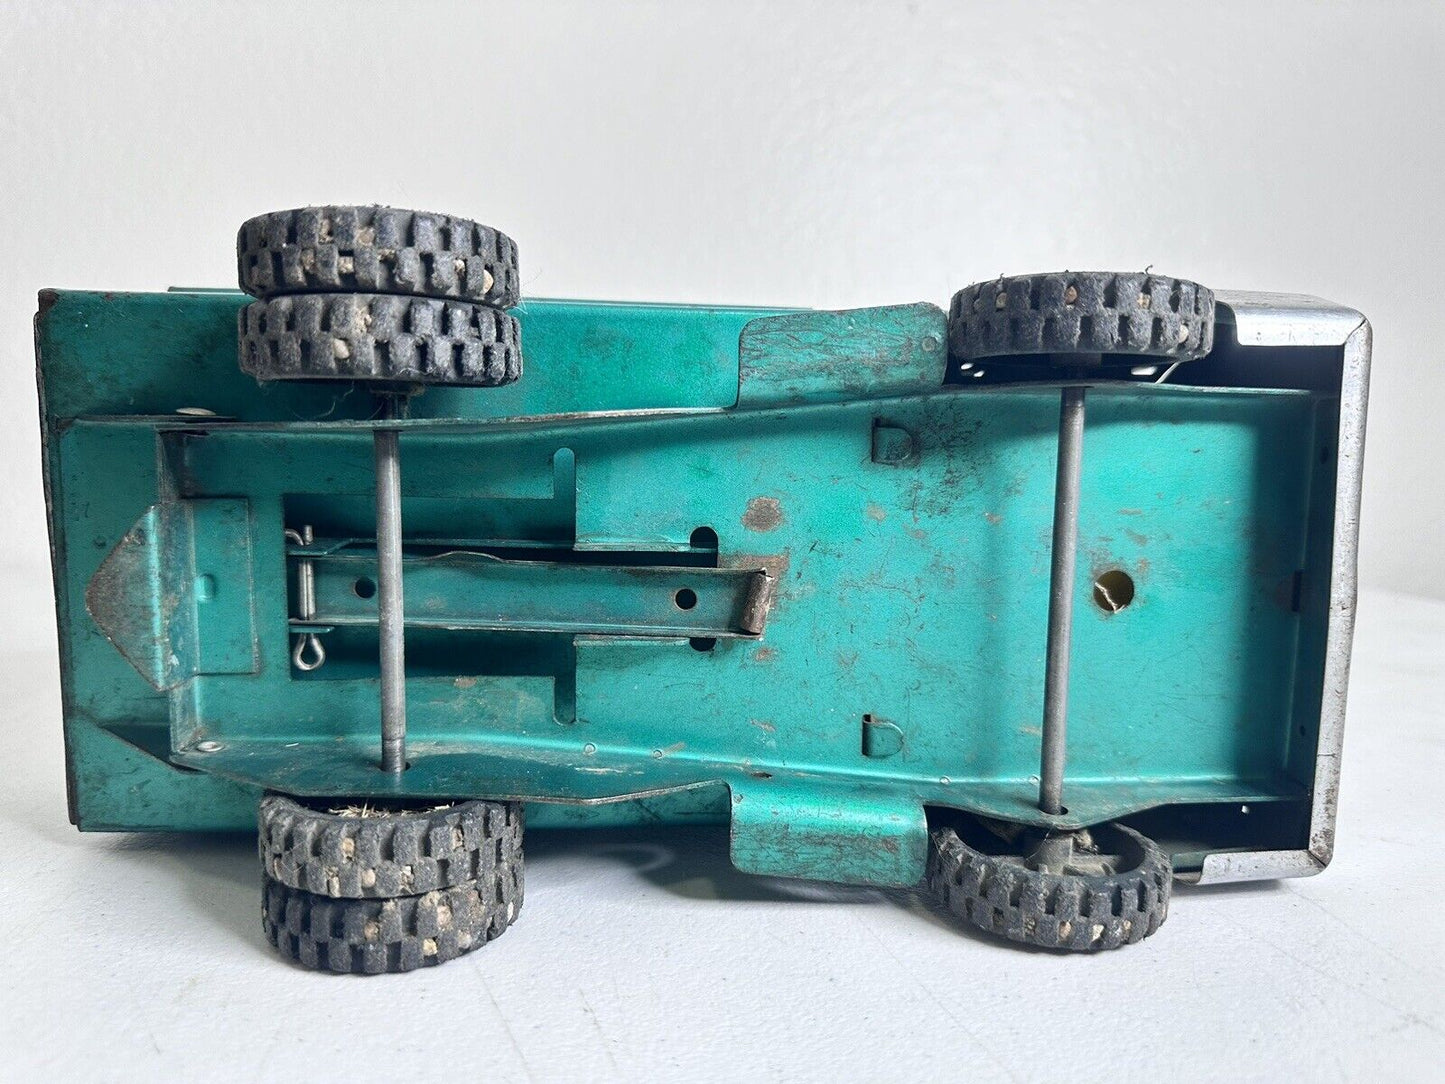 Vintage 1950s Structo Toys Green Metal Dump Truck - Classic Collectible Dumper - TreasuTiques